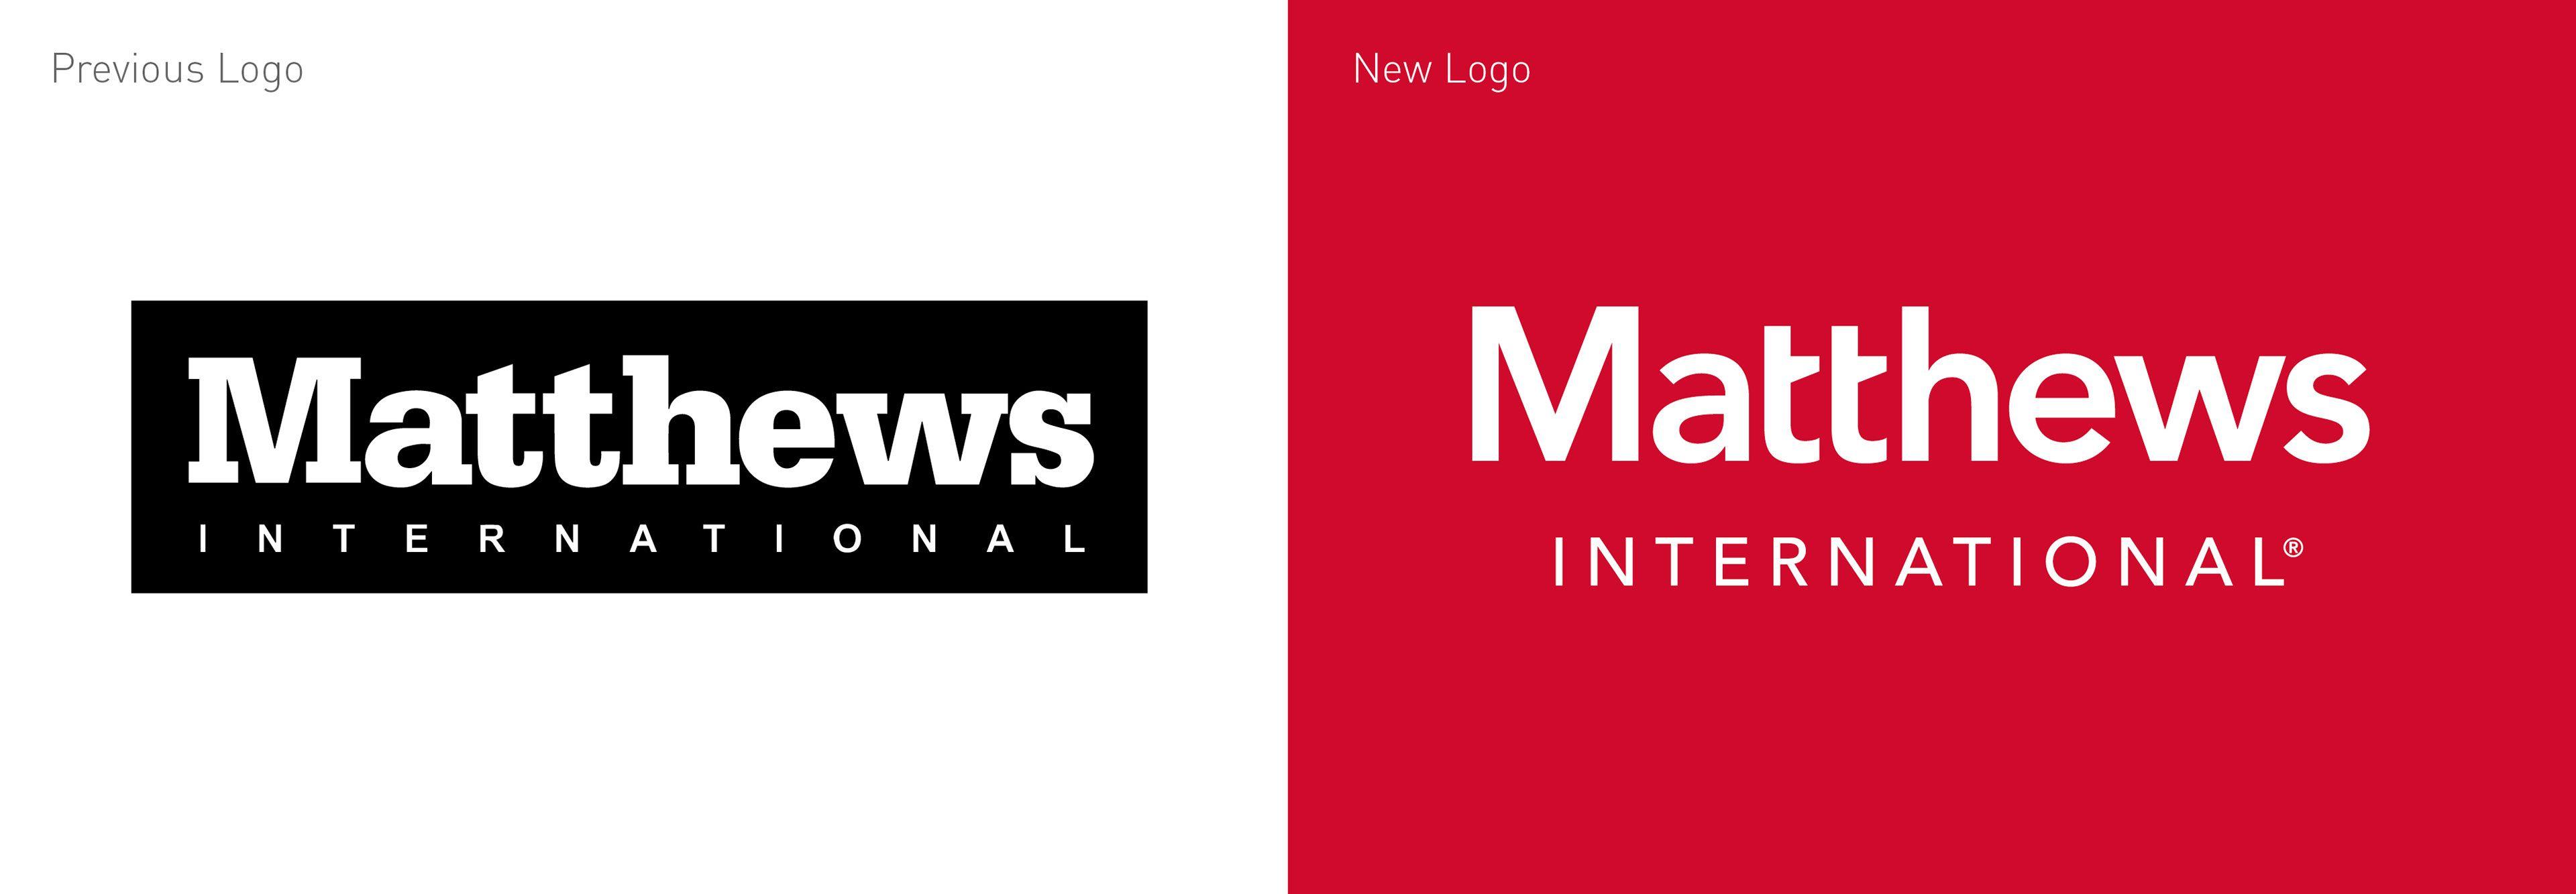 Matthews Logo - Nathanael Clanton - Matthews International Rebranding